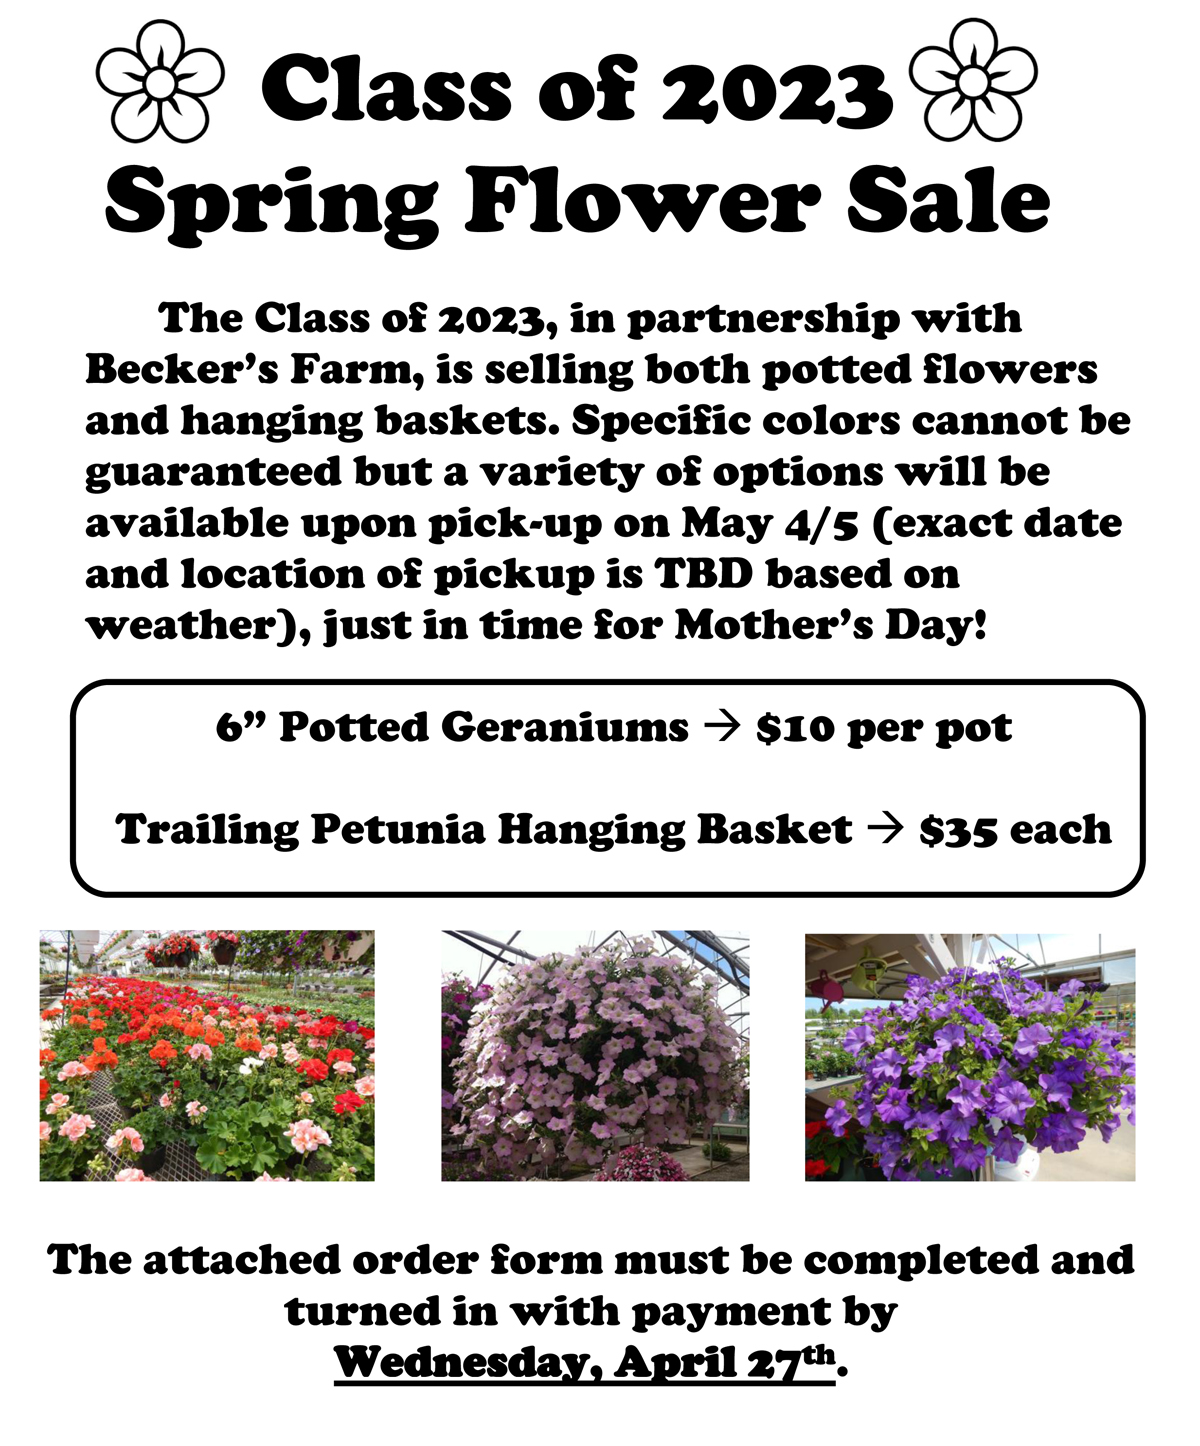 Class of 2023 Spring Flower Sale flyer